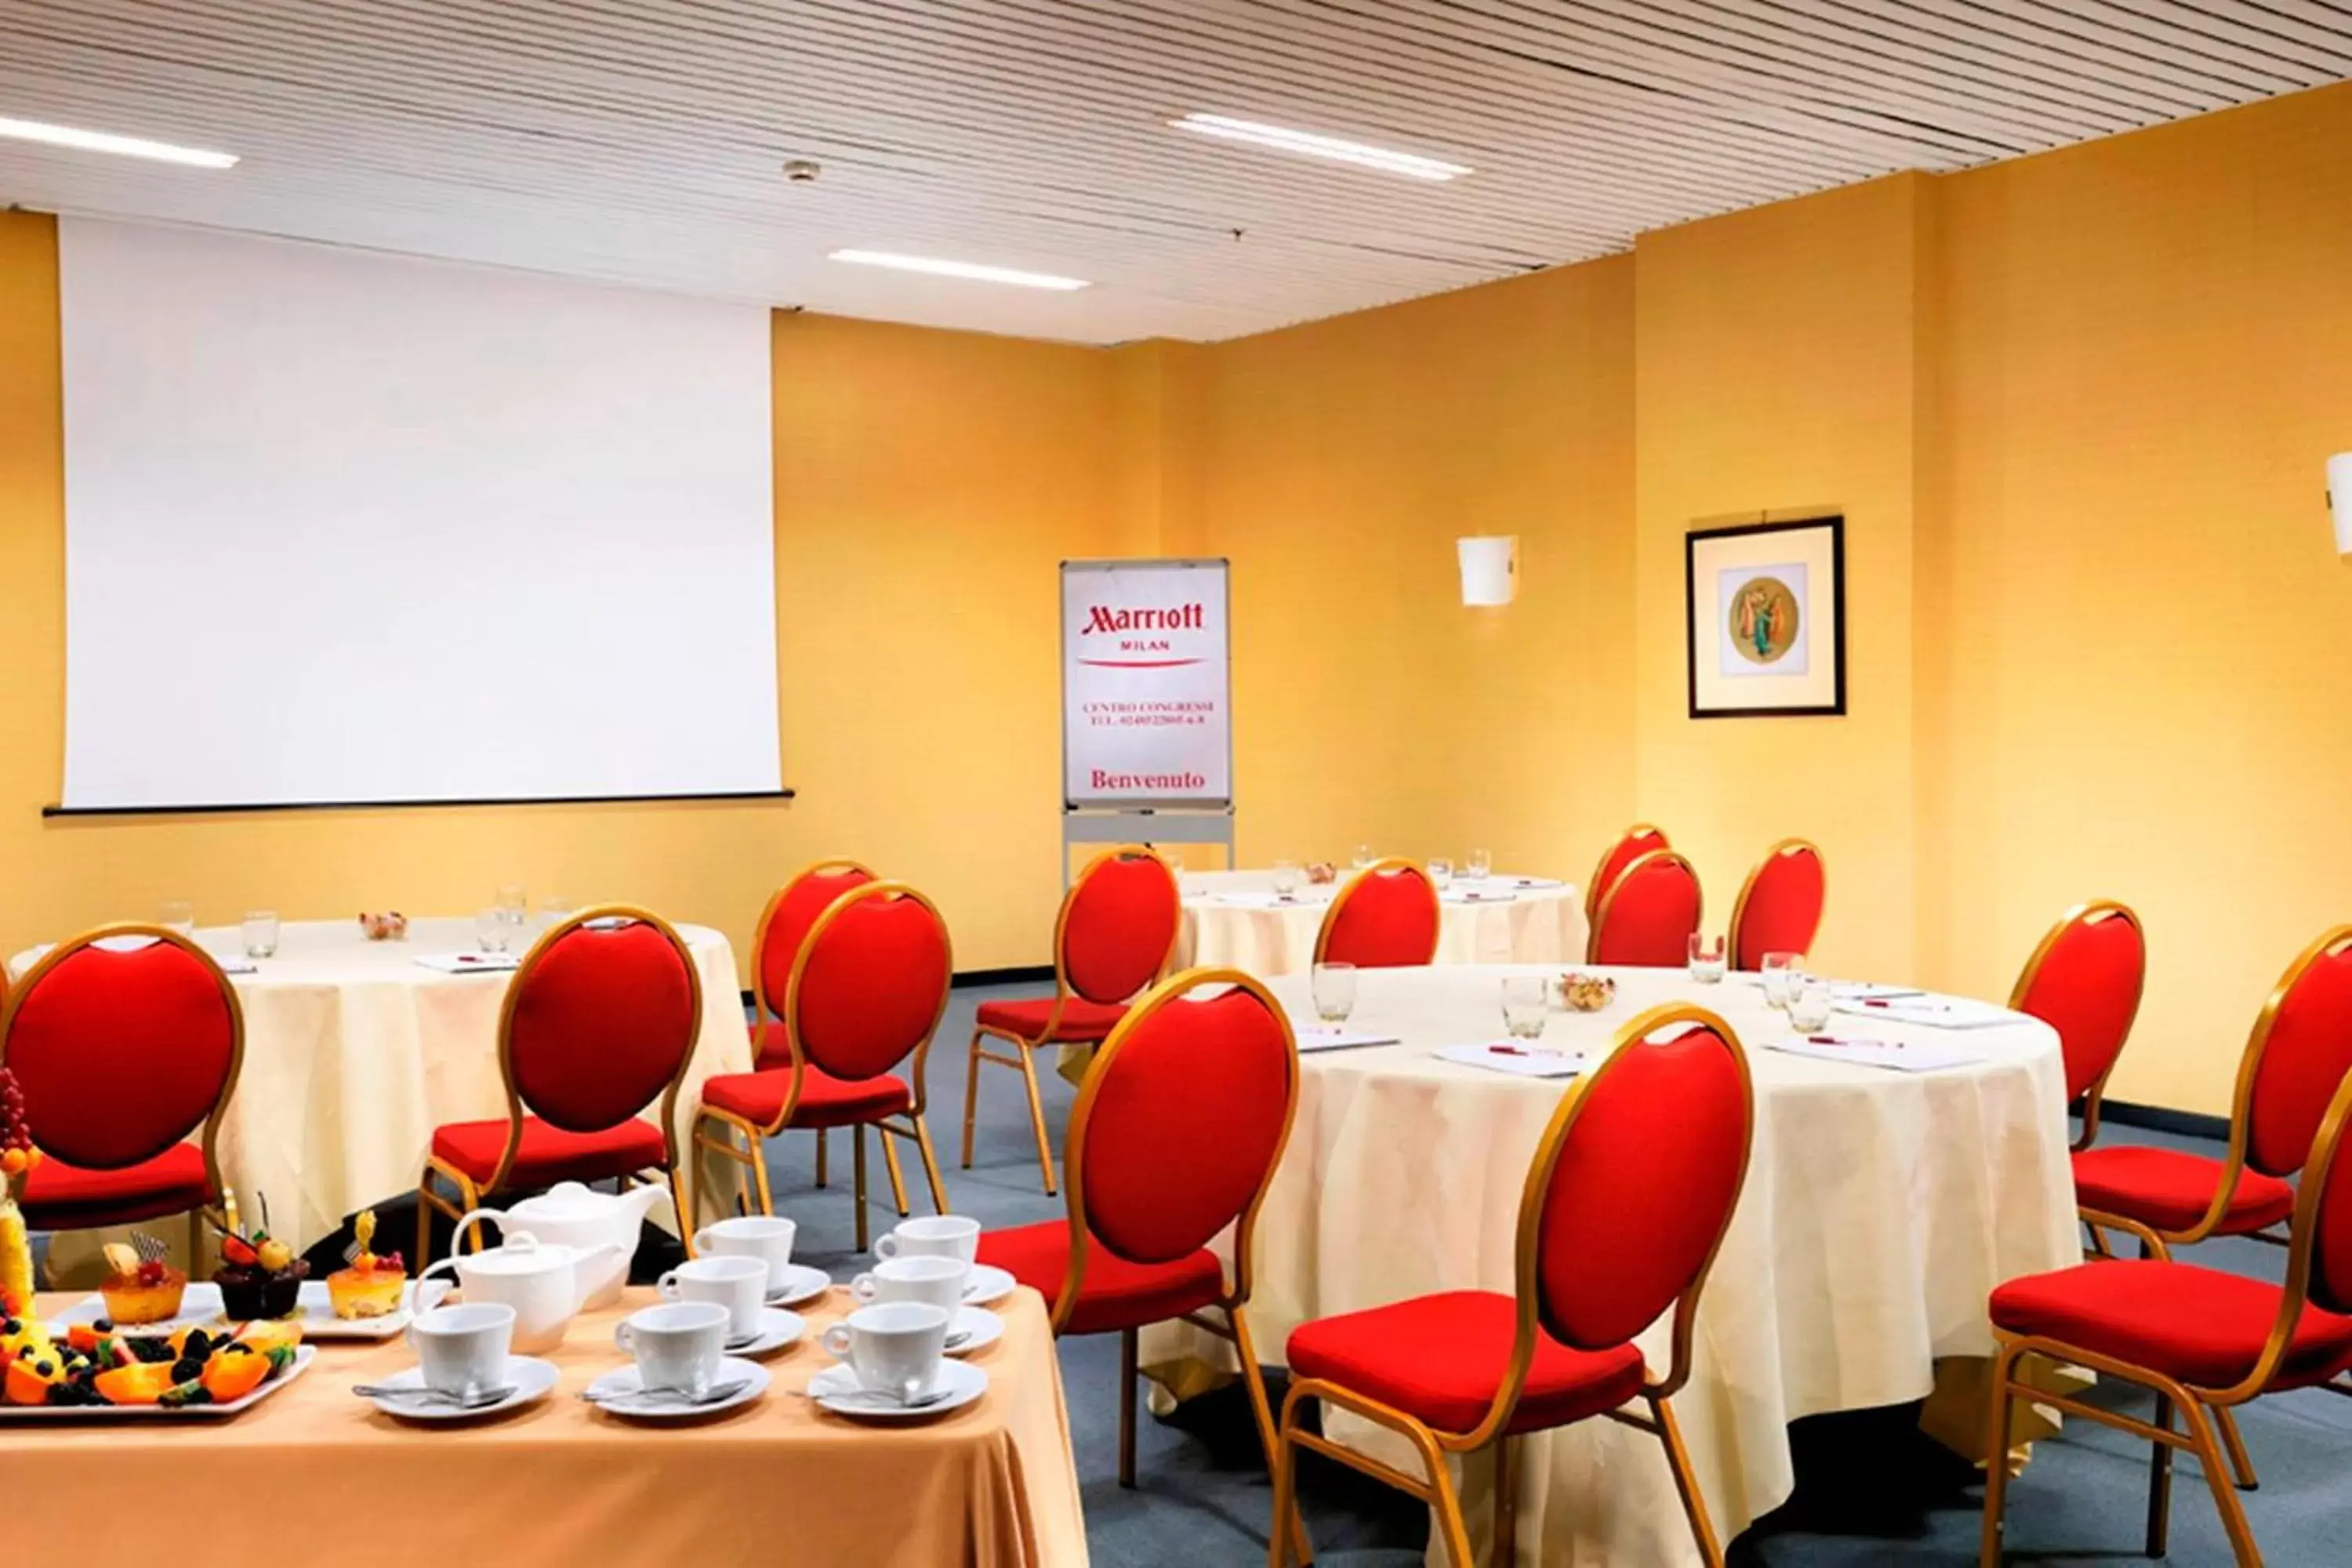 Meeting/conference room in Milan Marriott Hotel